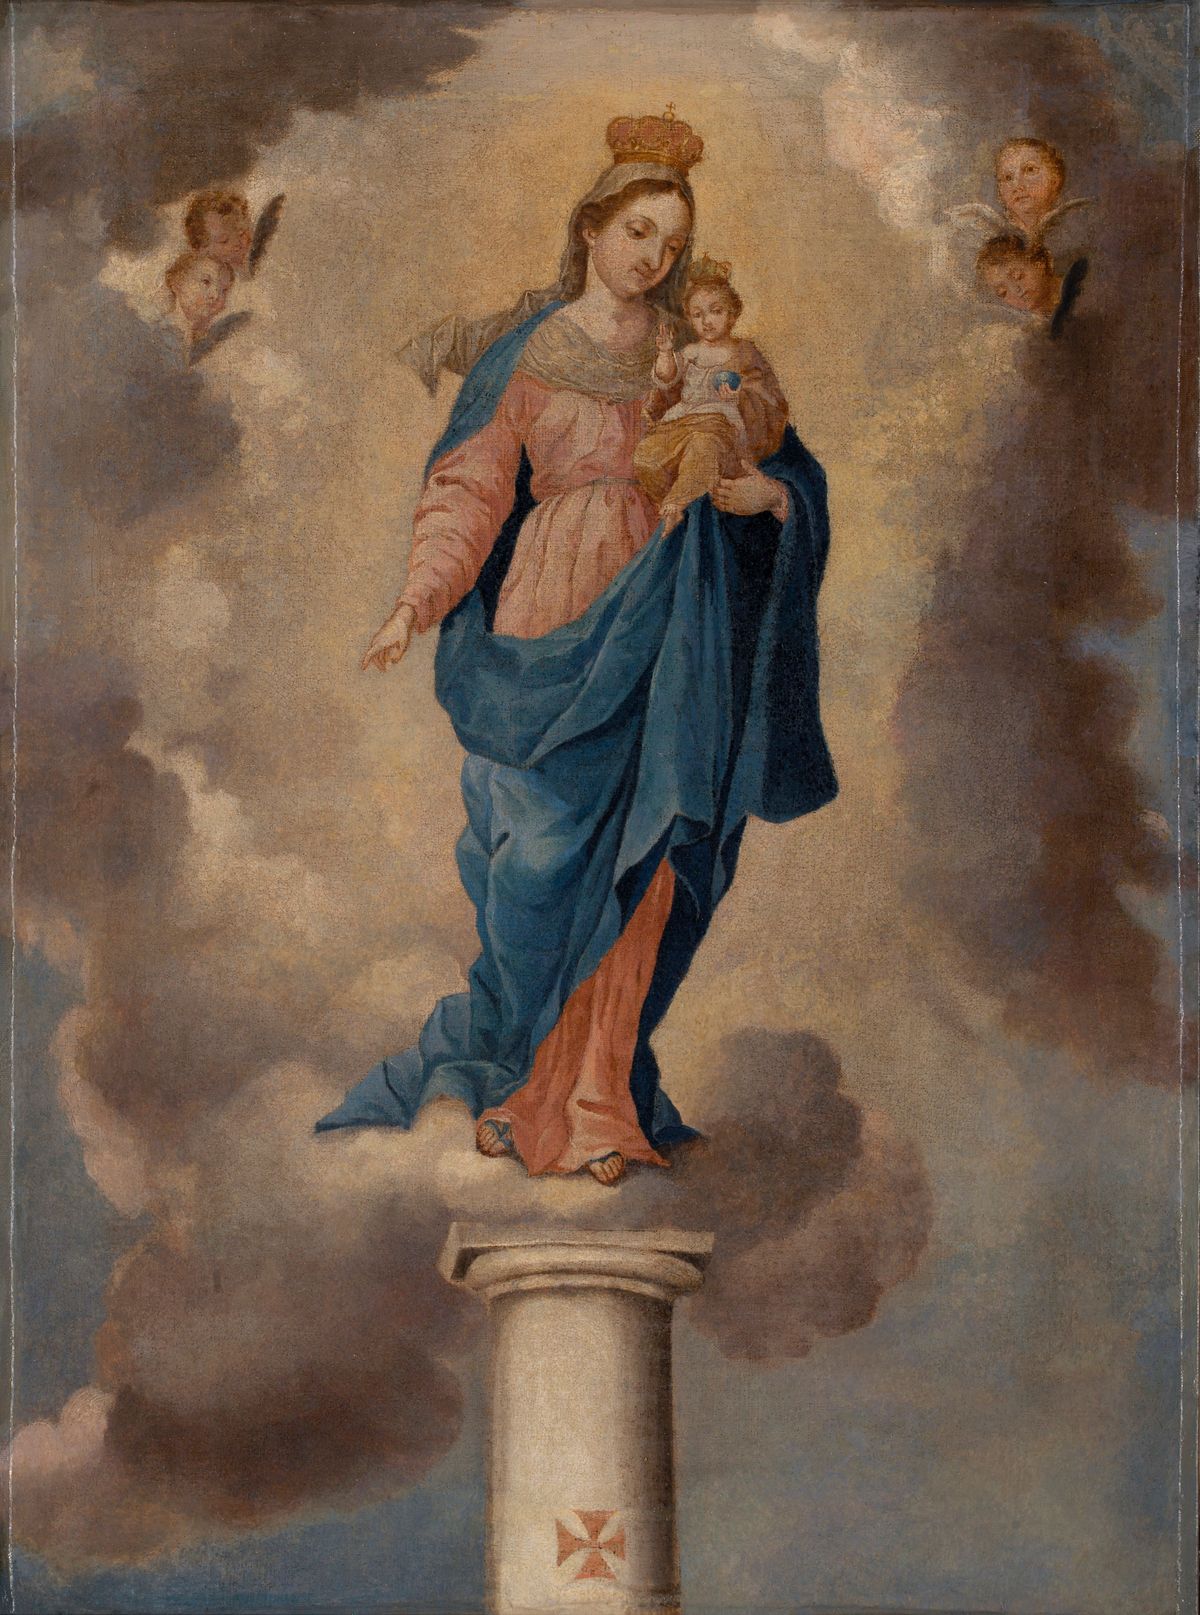 La Virgen del pilar (late 18th century, Puerto Rico) by José Campeche y Jordán - Public Domain Catholic Painting